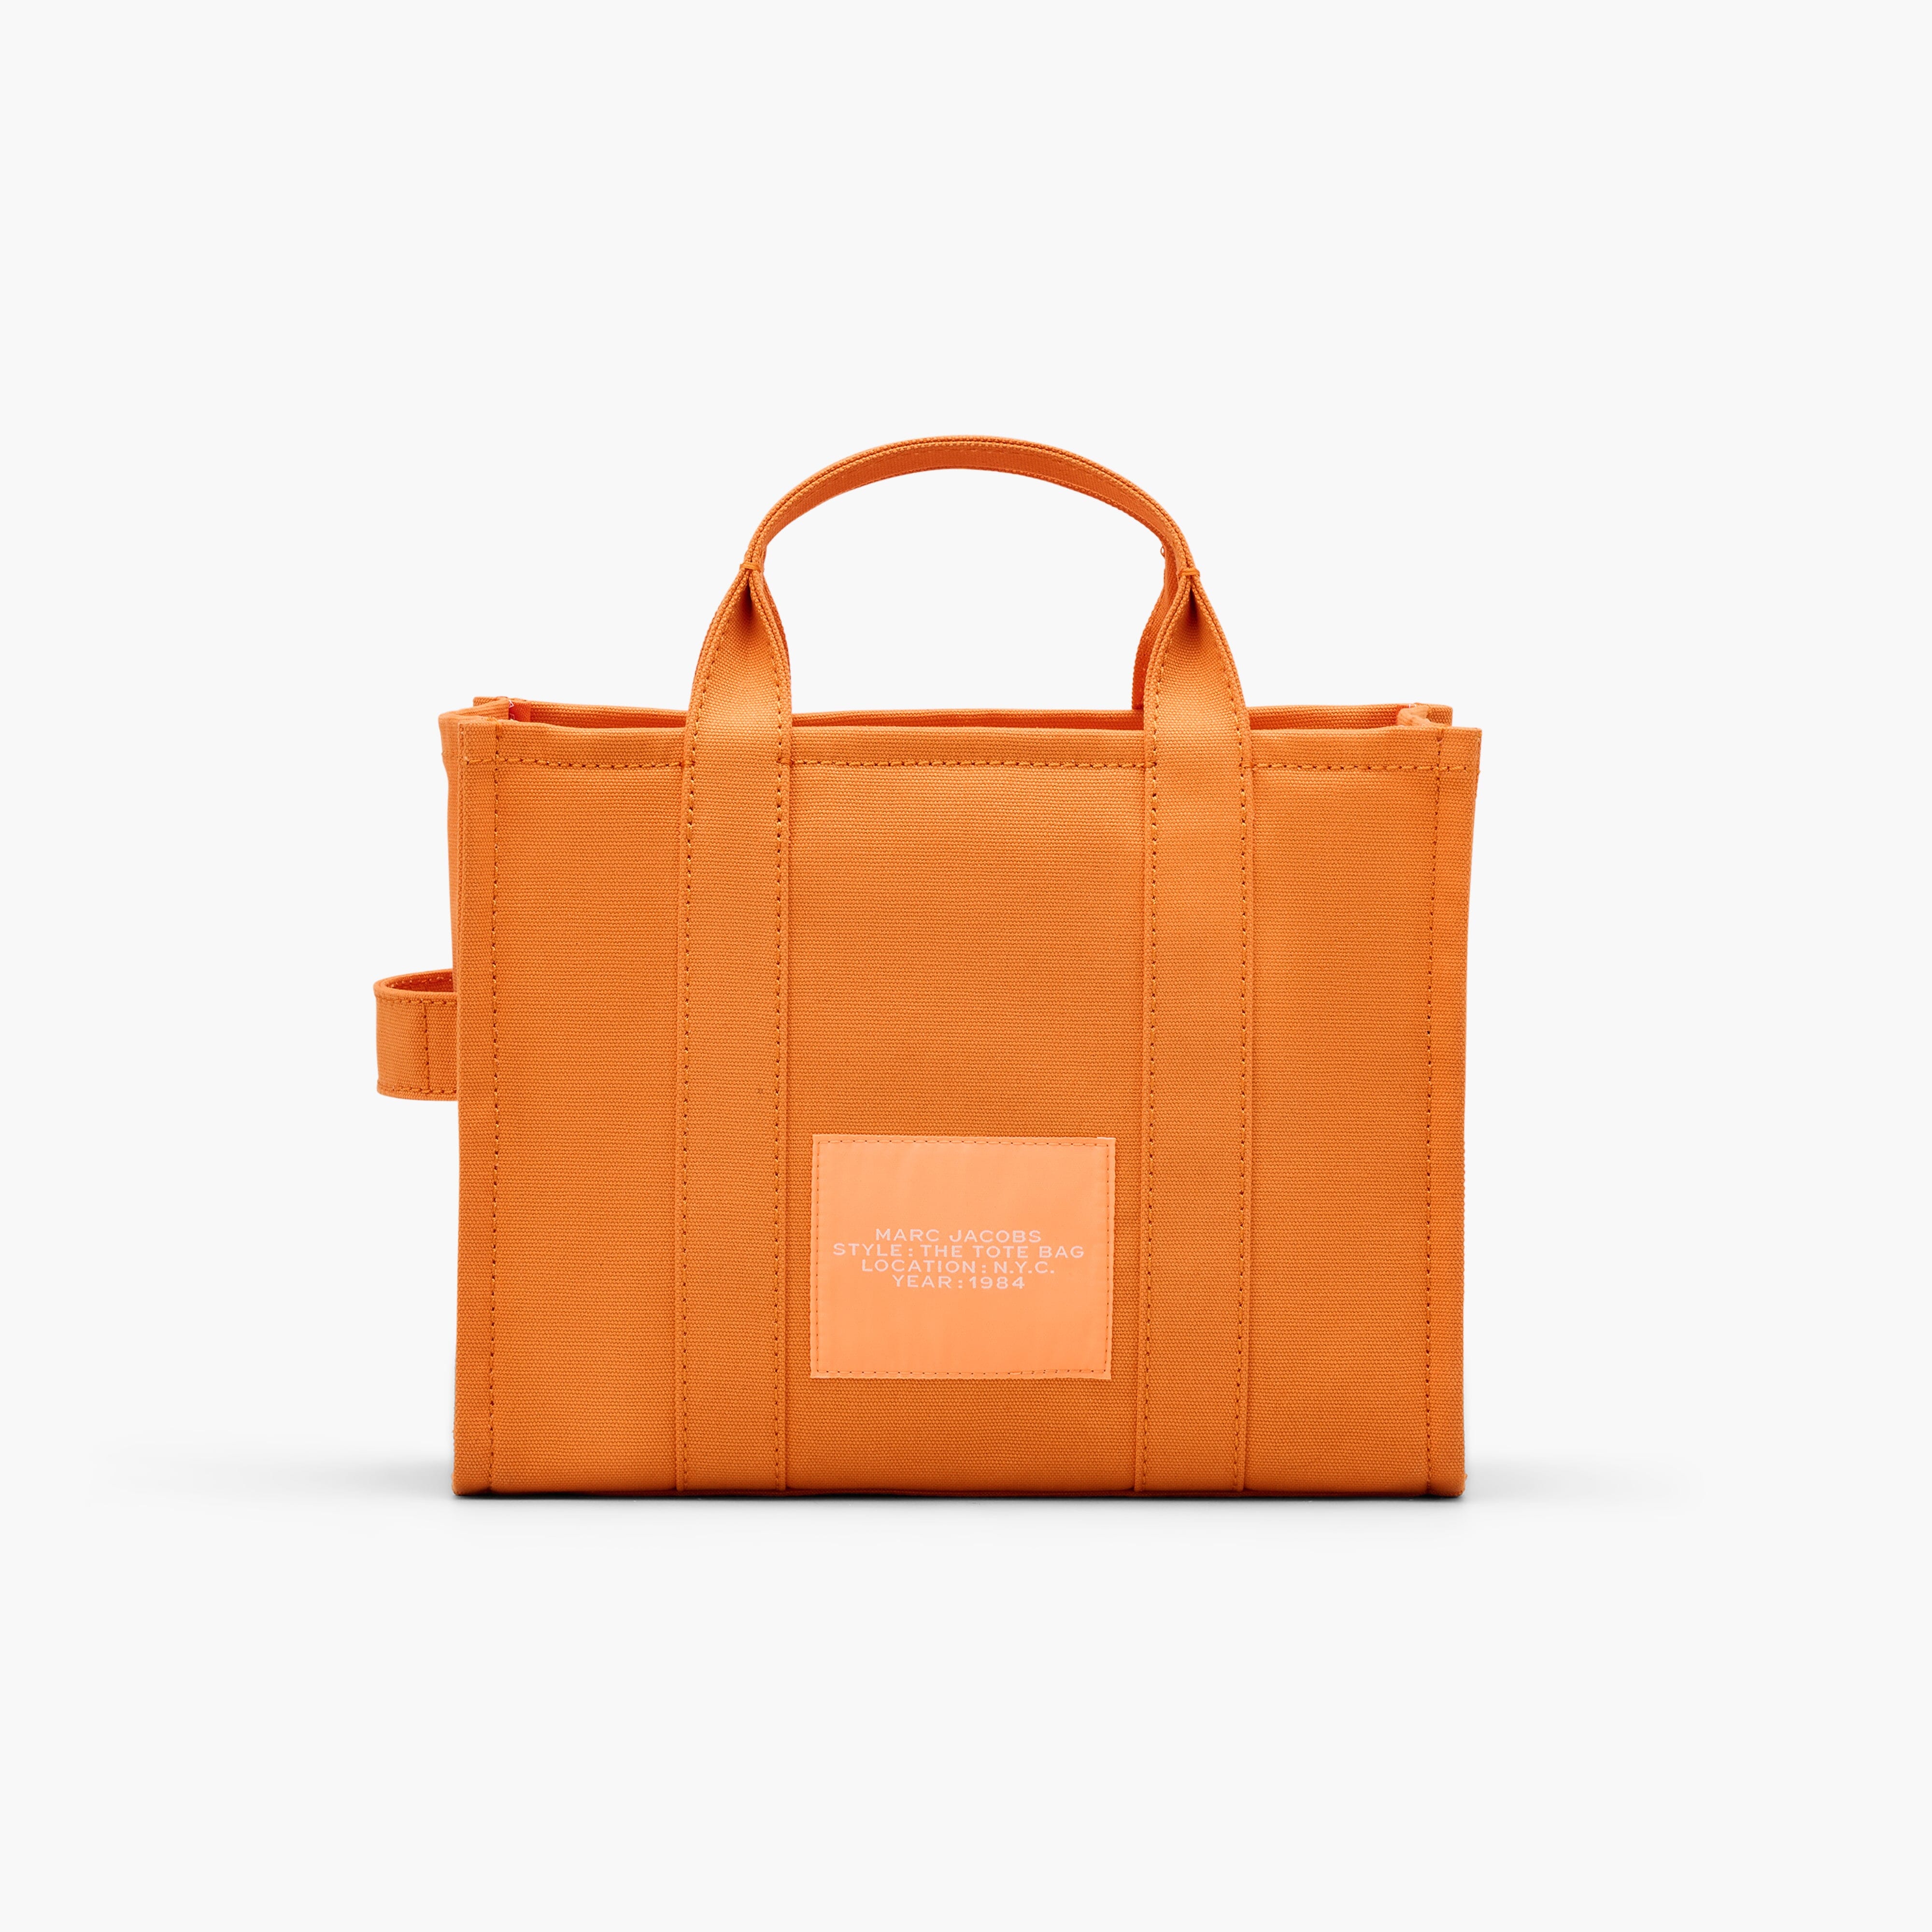 MARC JACOBS - The Medium Tote Bag - M0016161- 818 Tangerine Borse Marc Jacobs 